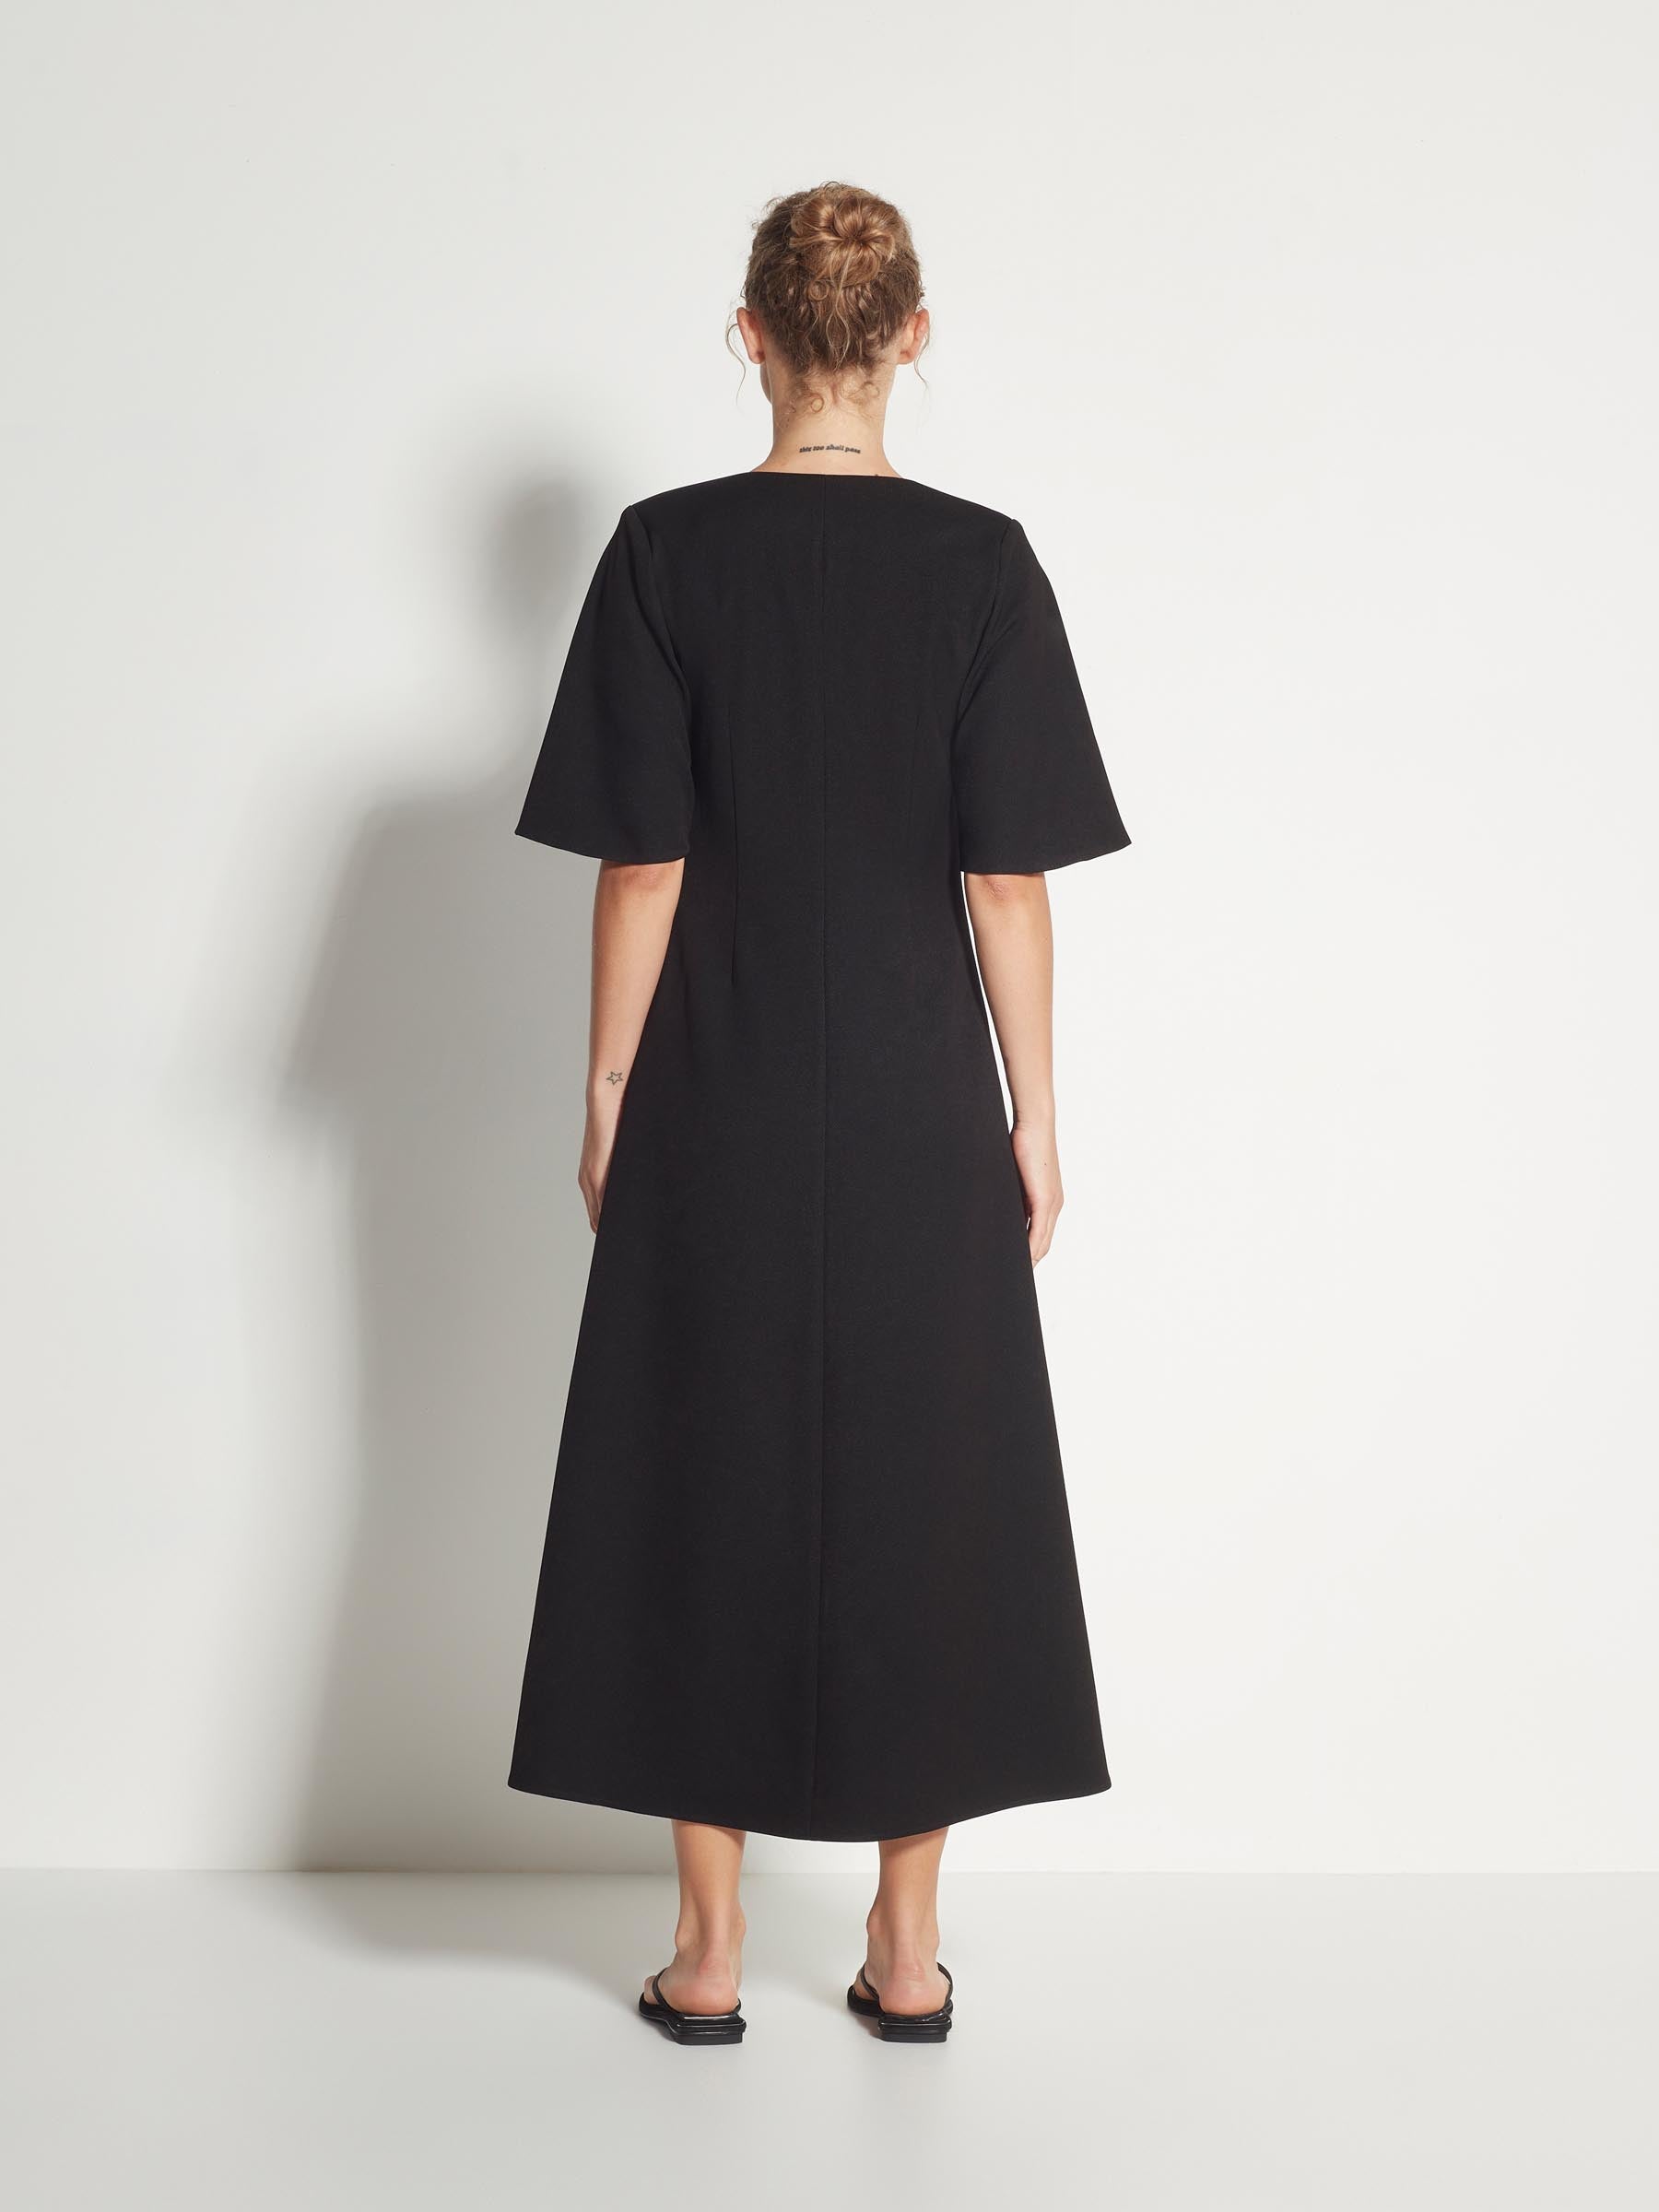 Flinn Dress (Tech Twill Suiting) Black